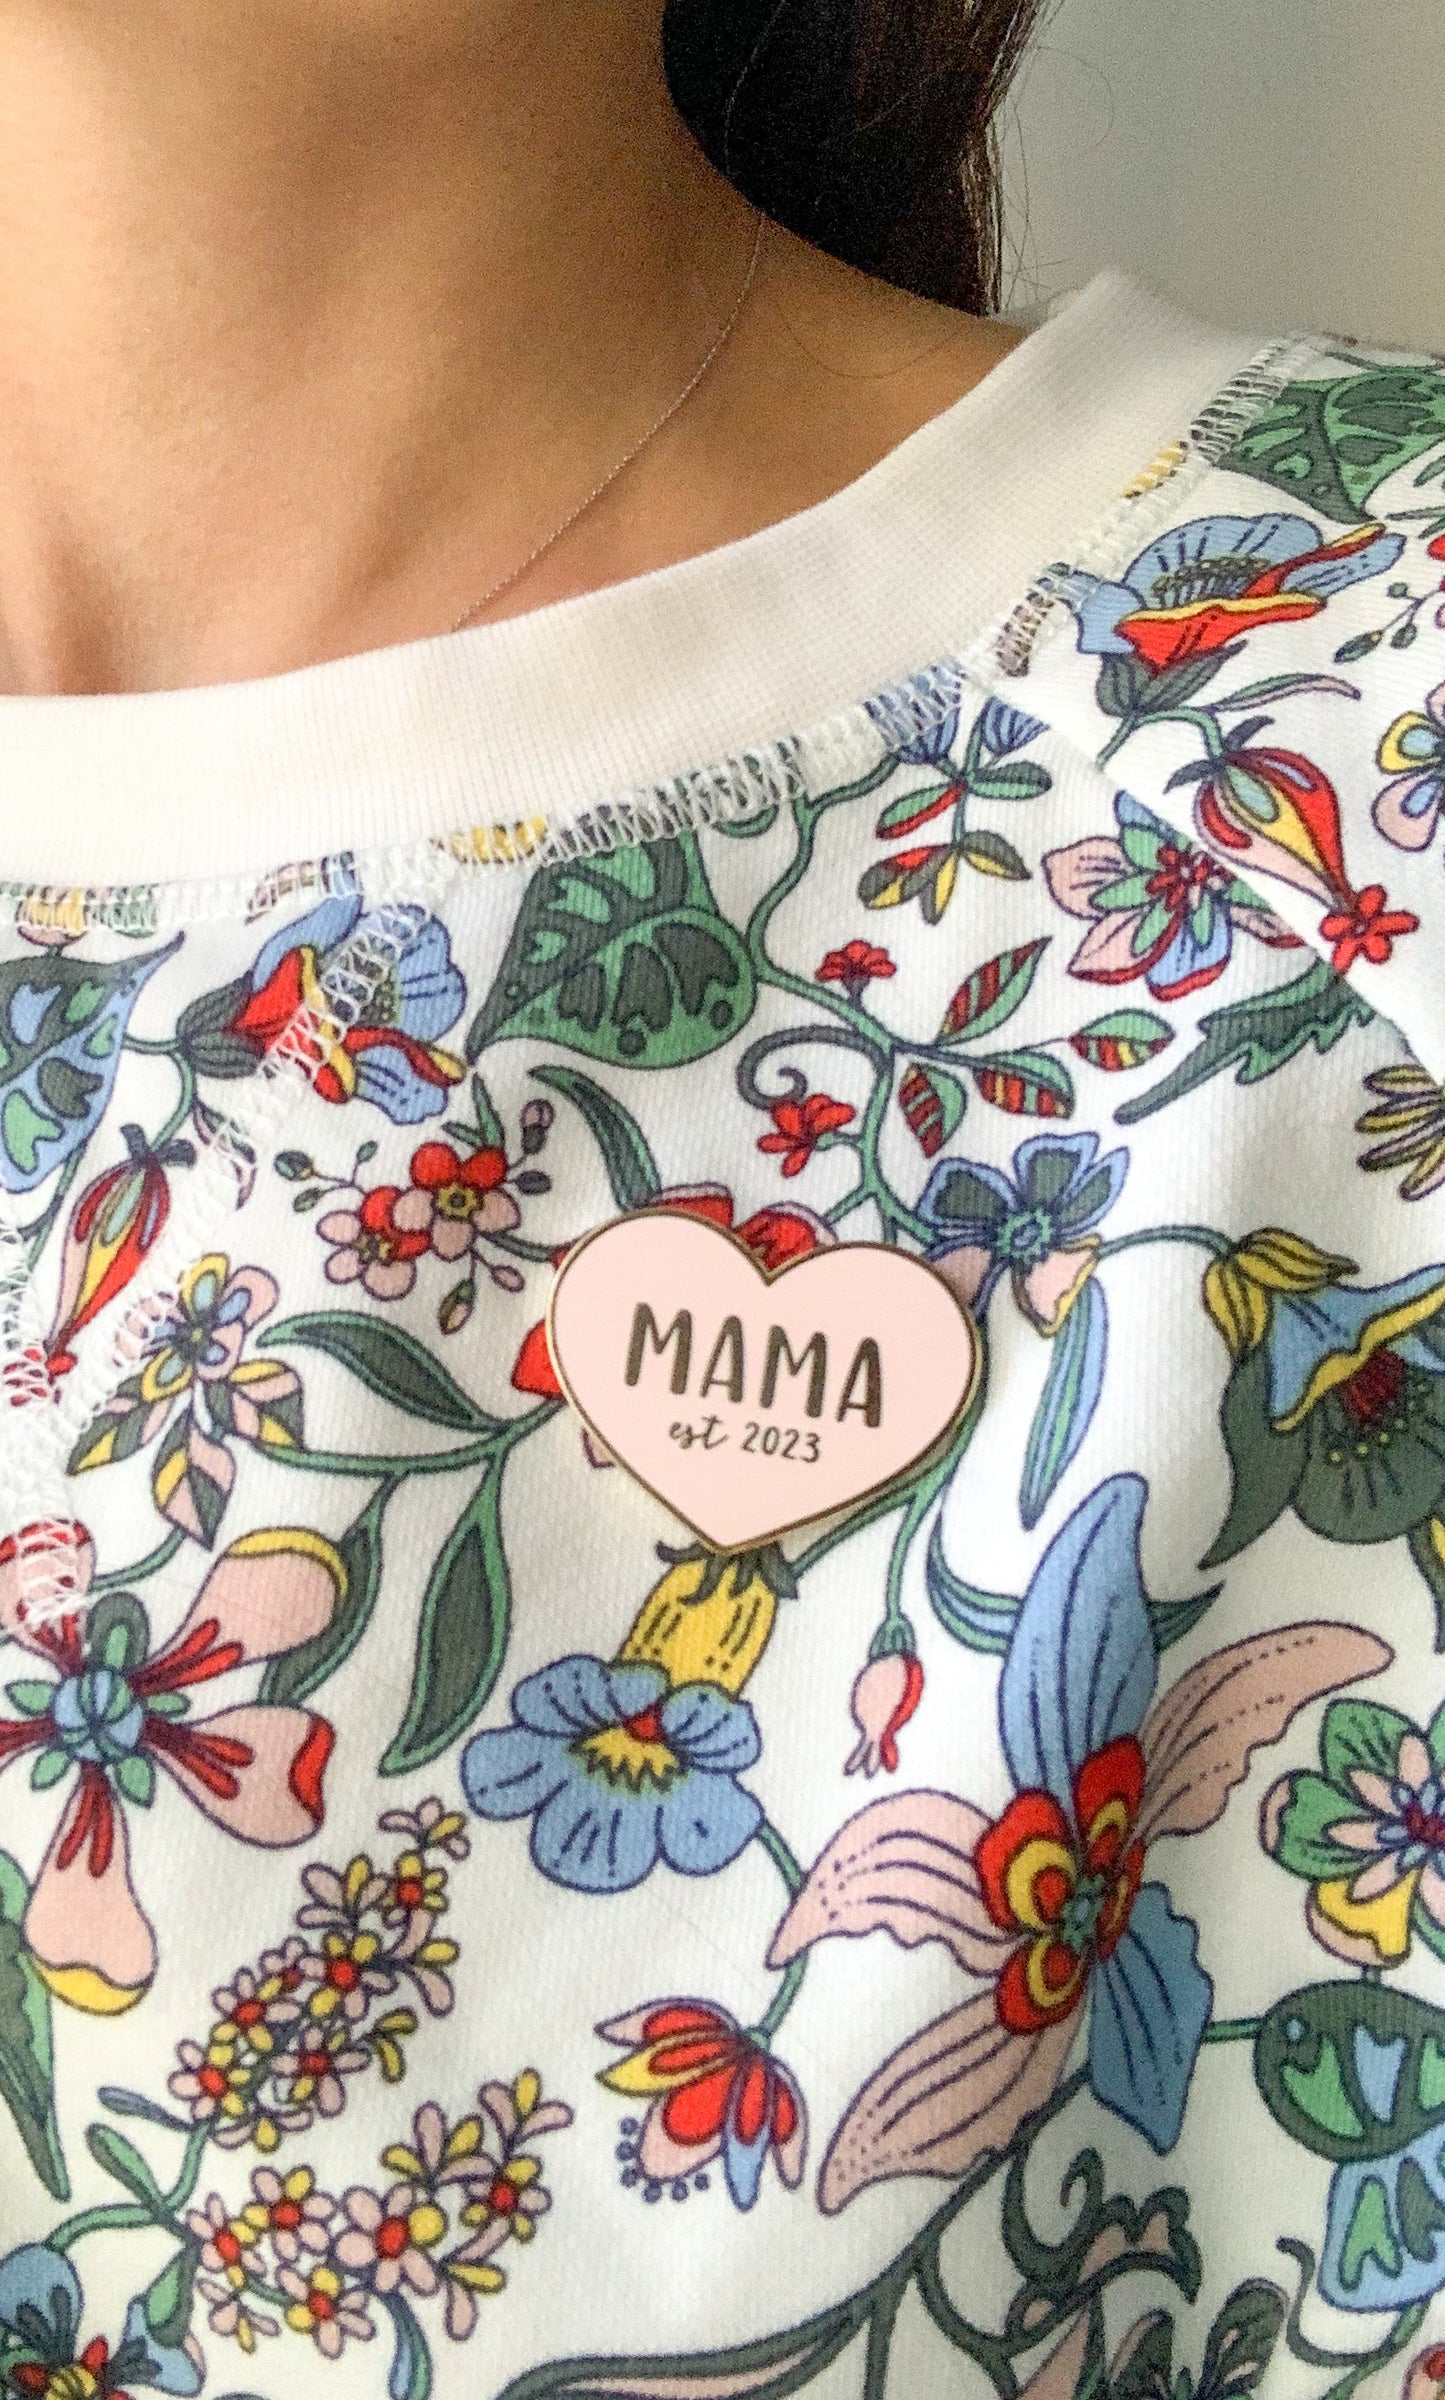 Mama enamel pin from Fourth Trimester Mama on a sweatshirt